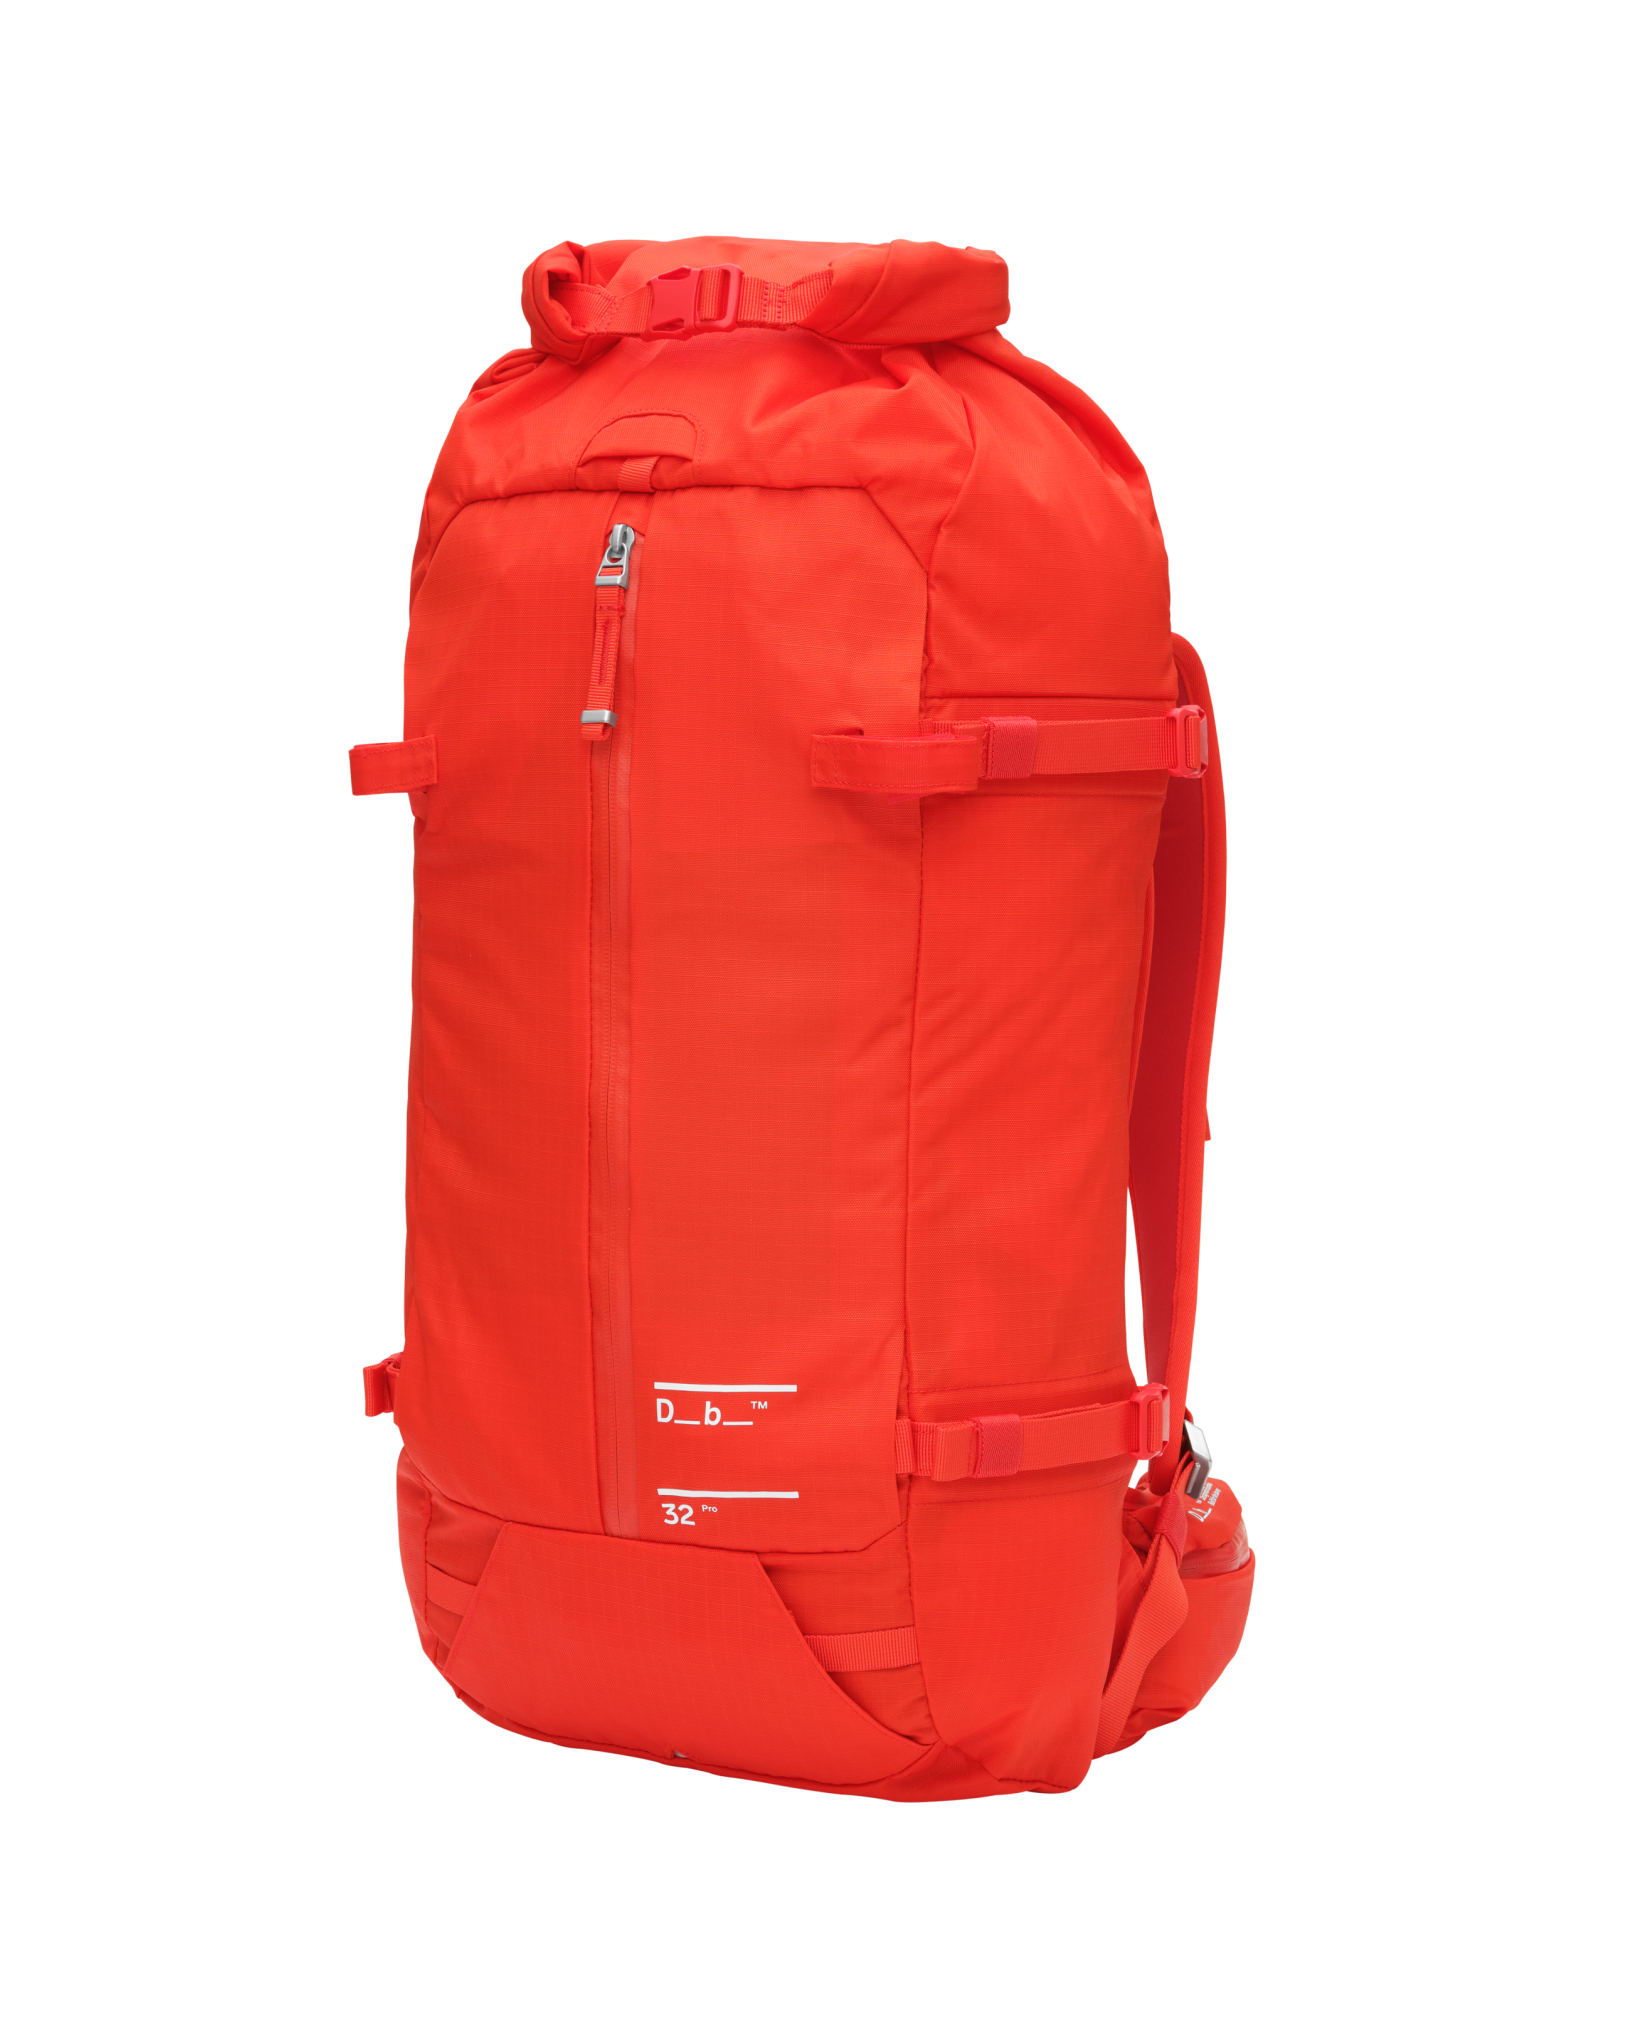 Snow Pro Backpack 32L Falu Red - Falu Red